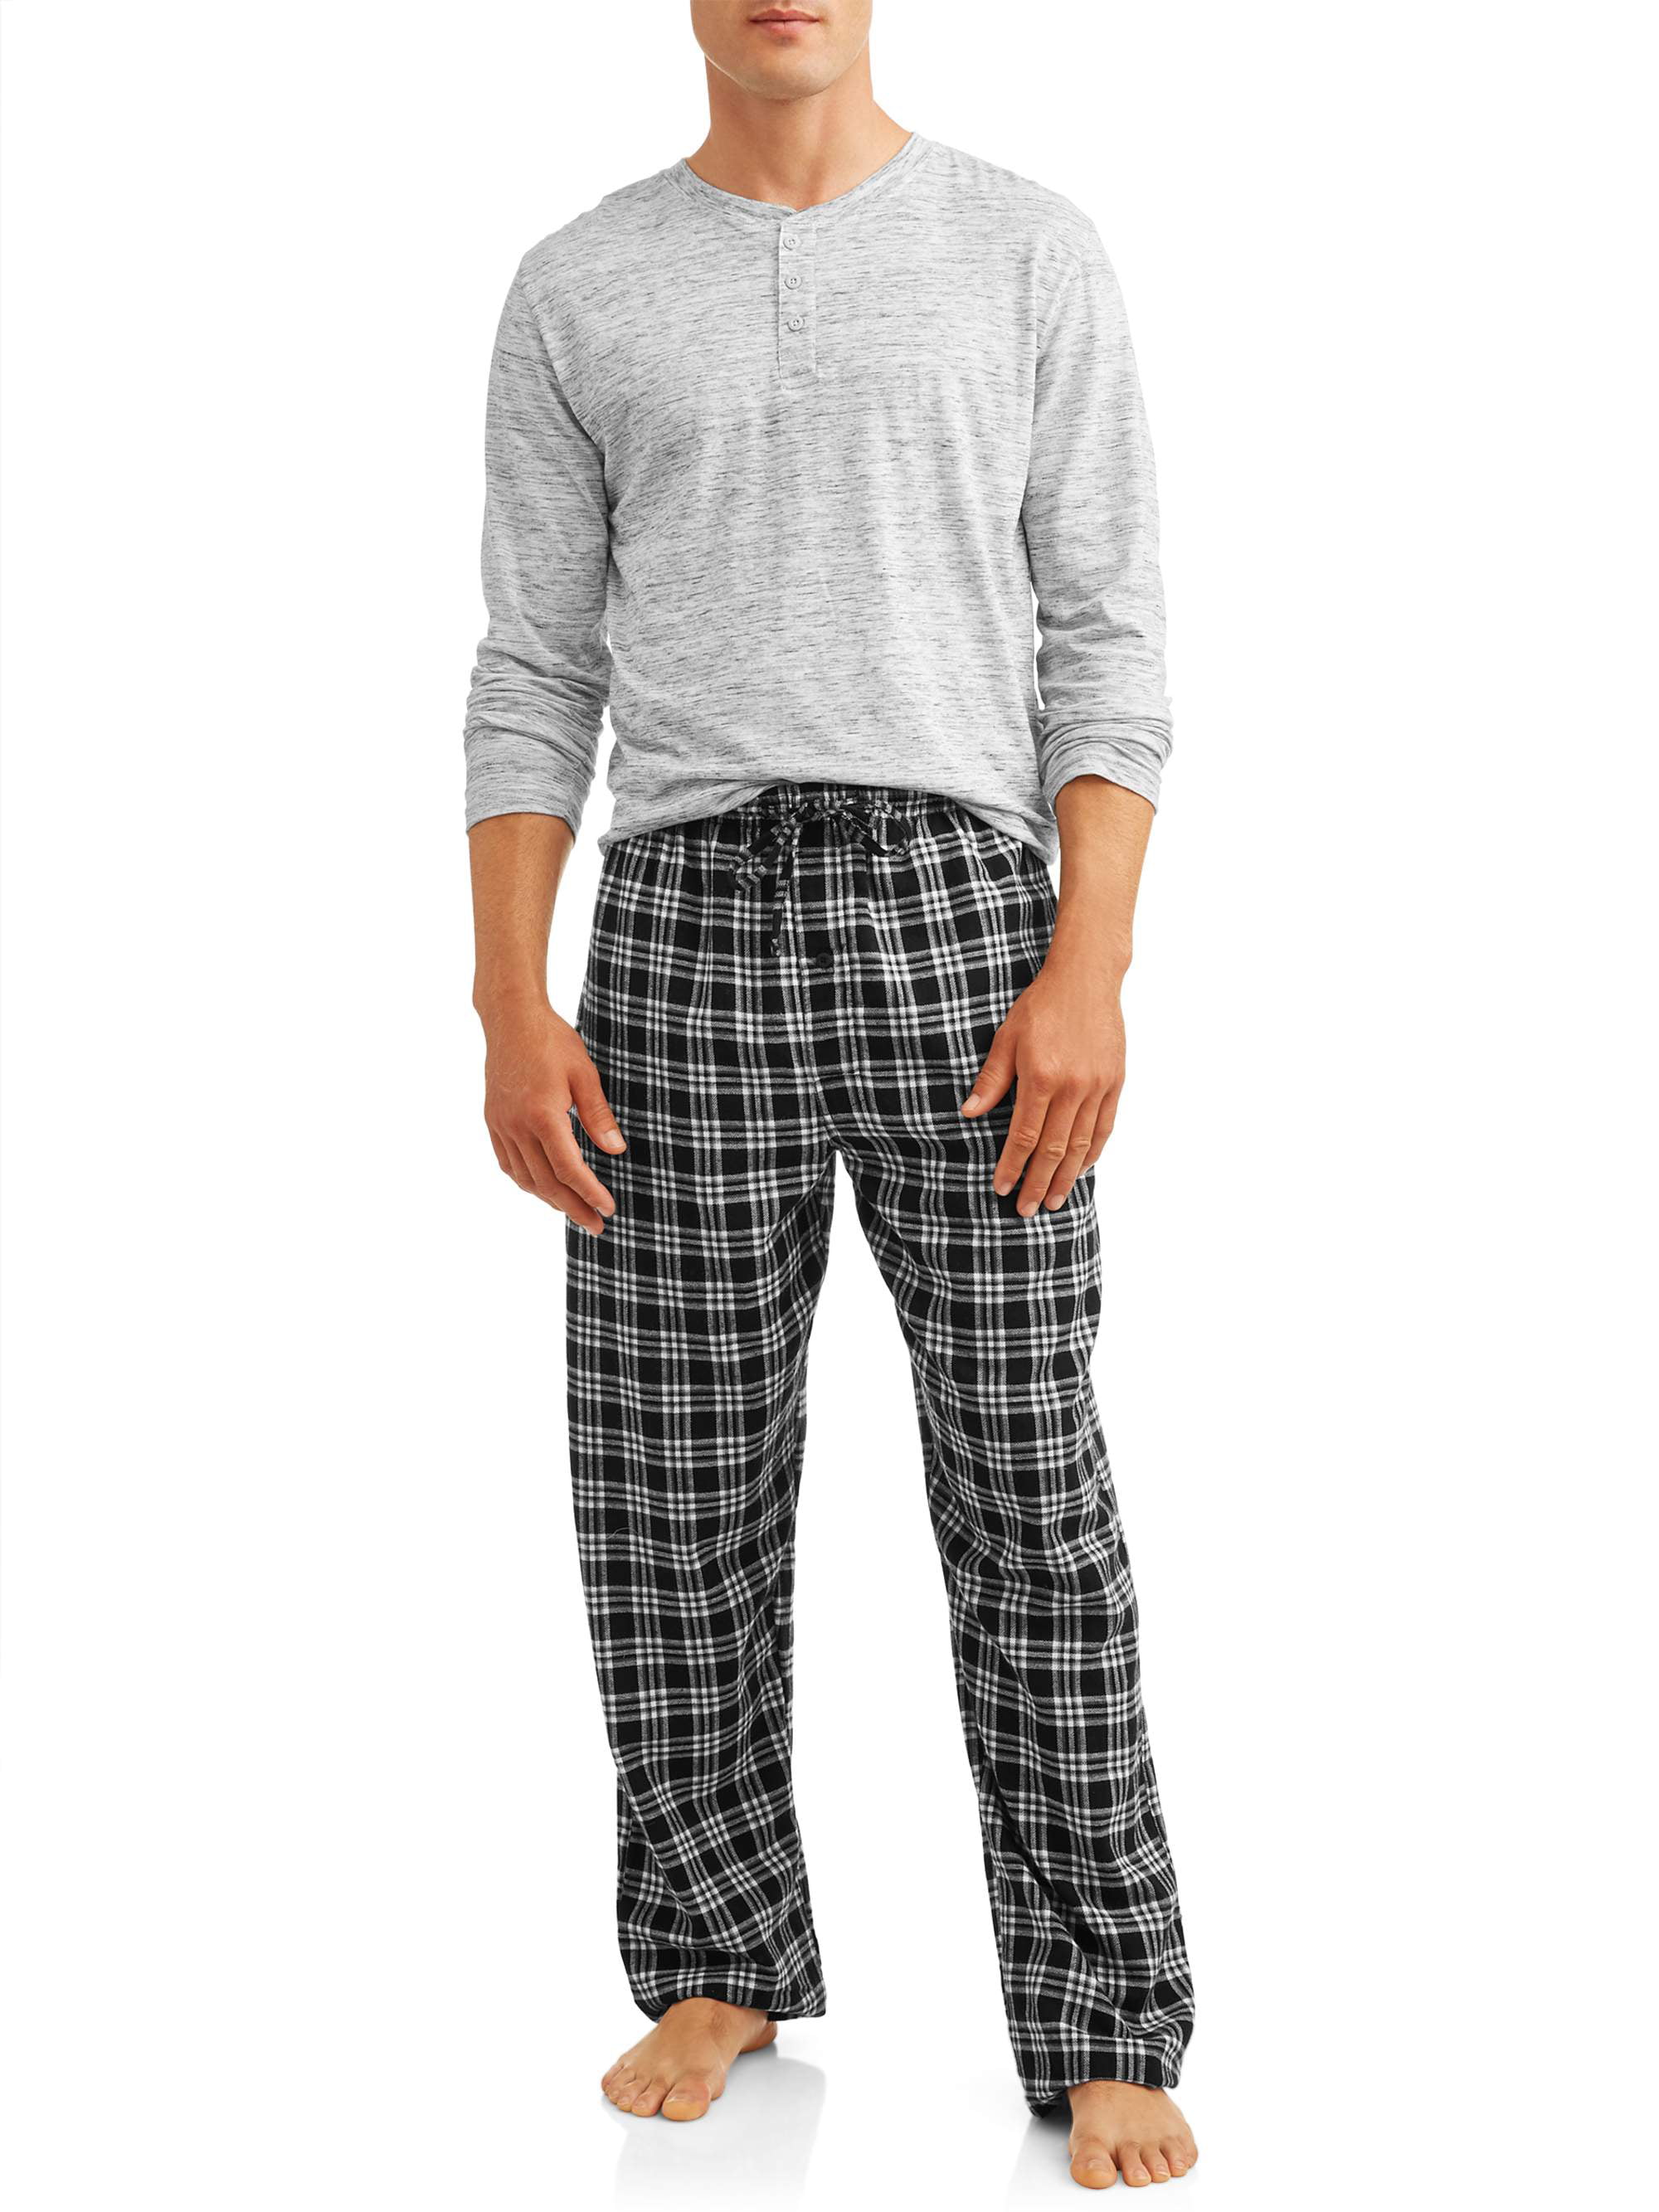 Hanes Mens Jersey Knit Pajama Set